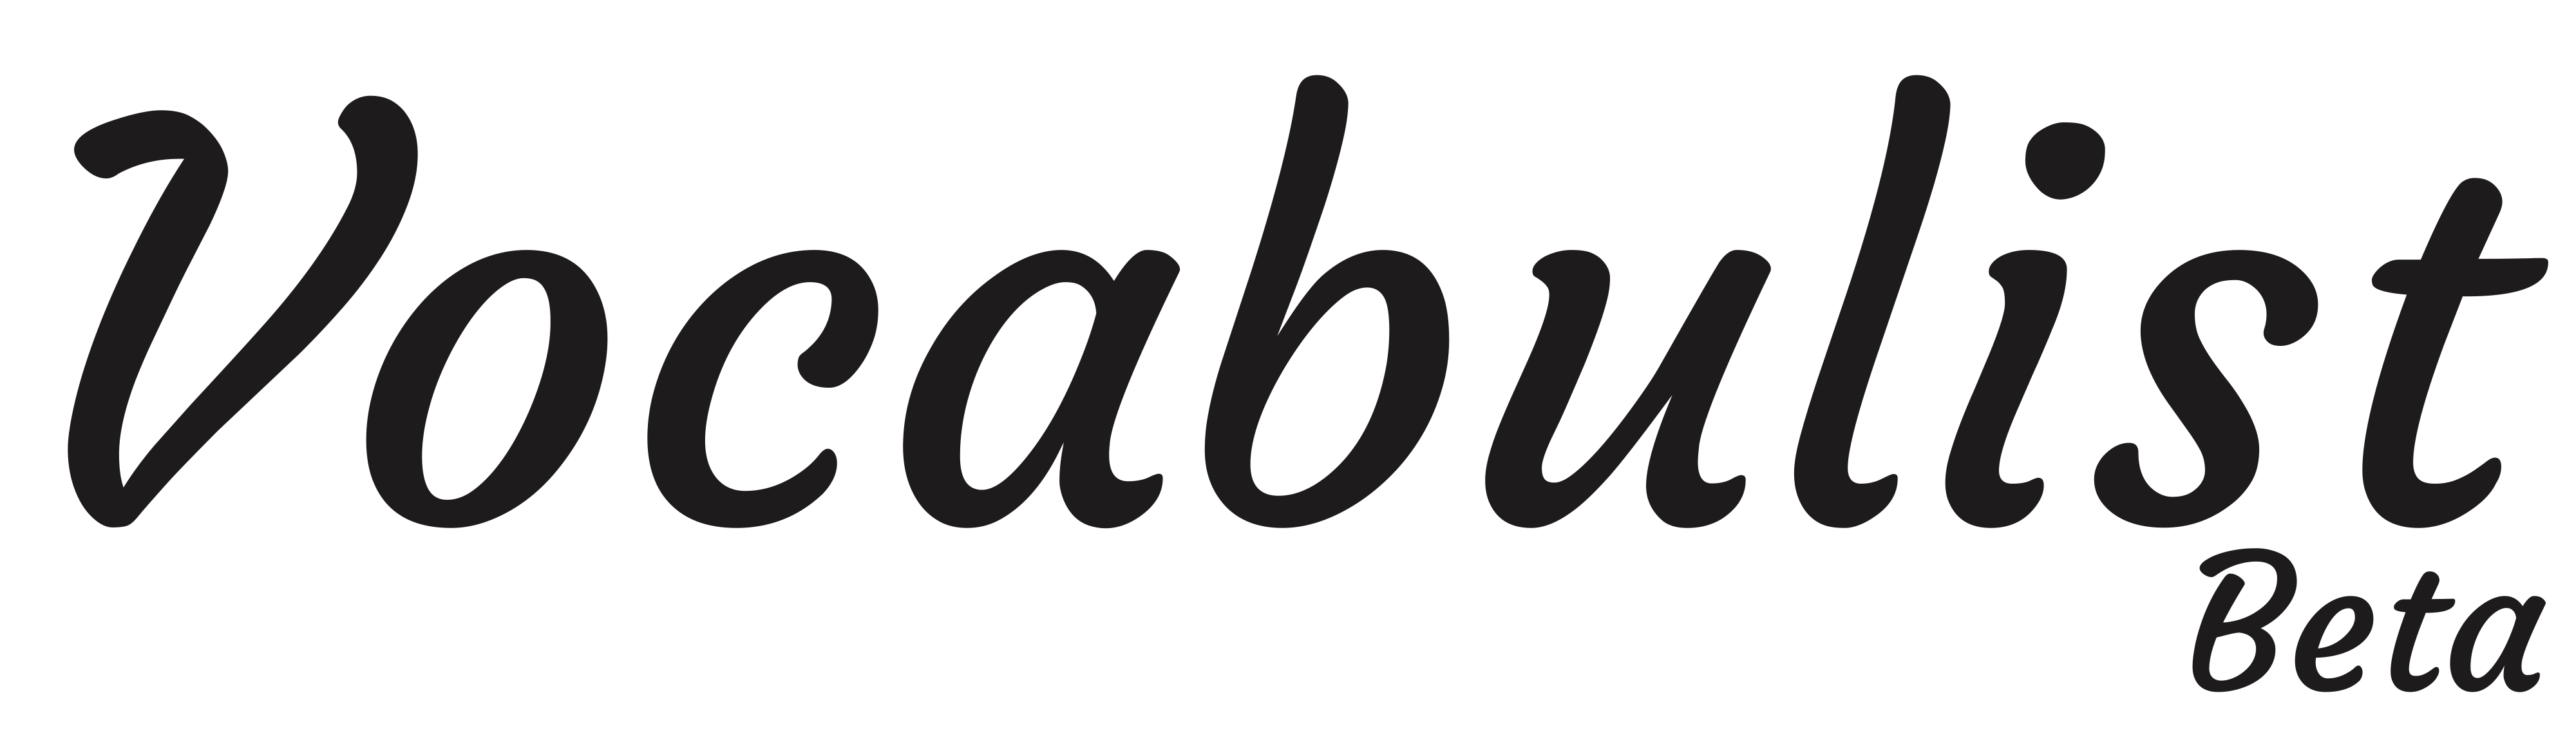 Vocabulist Logo